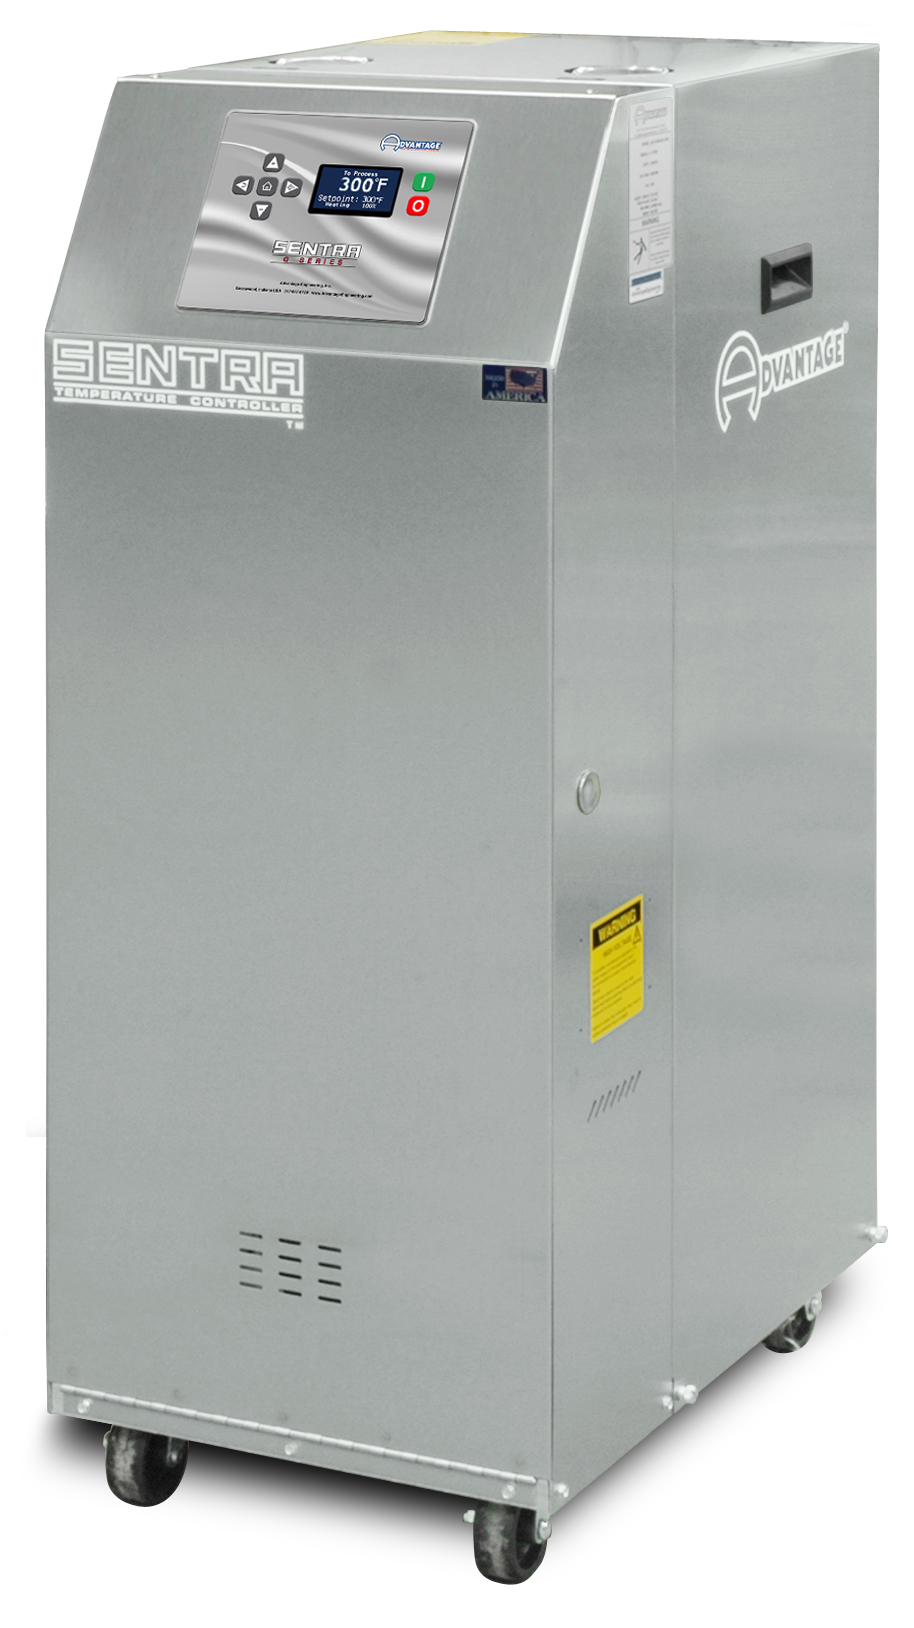 Temperature Control Unit : Sentra Series with G300° control instrument